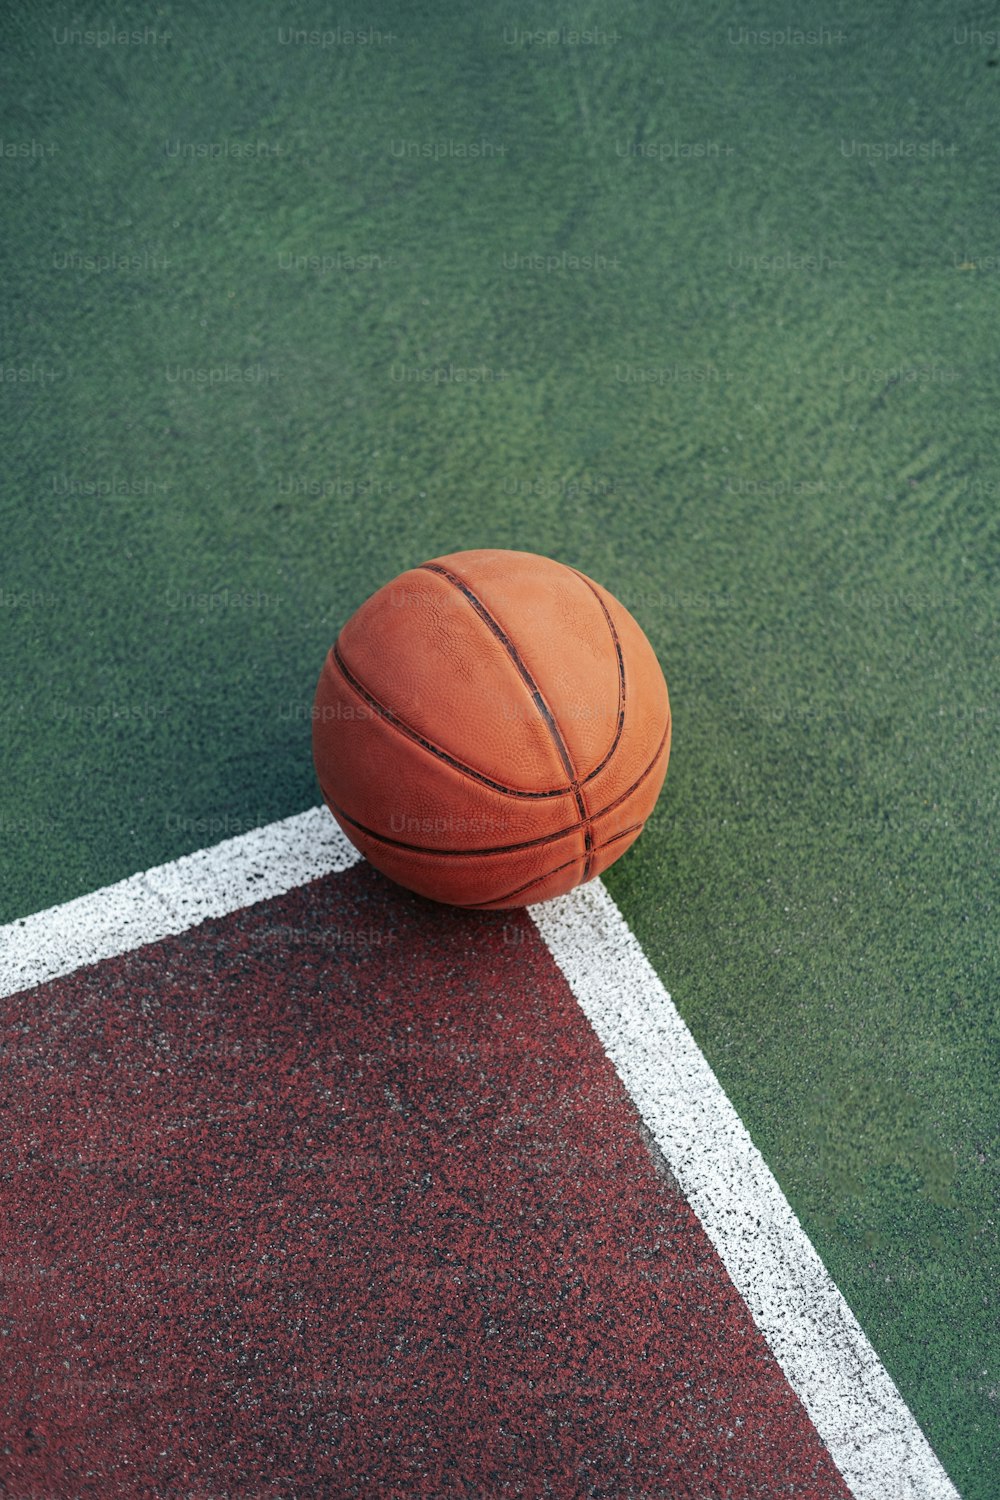 Un ballon de basket assis sur un terrain vert